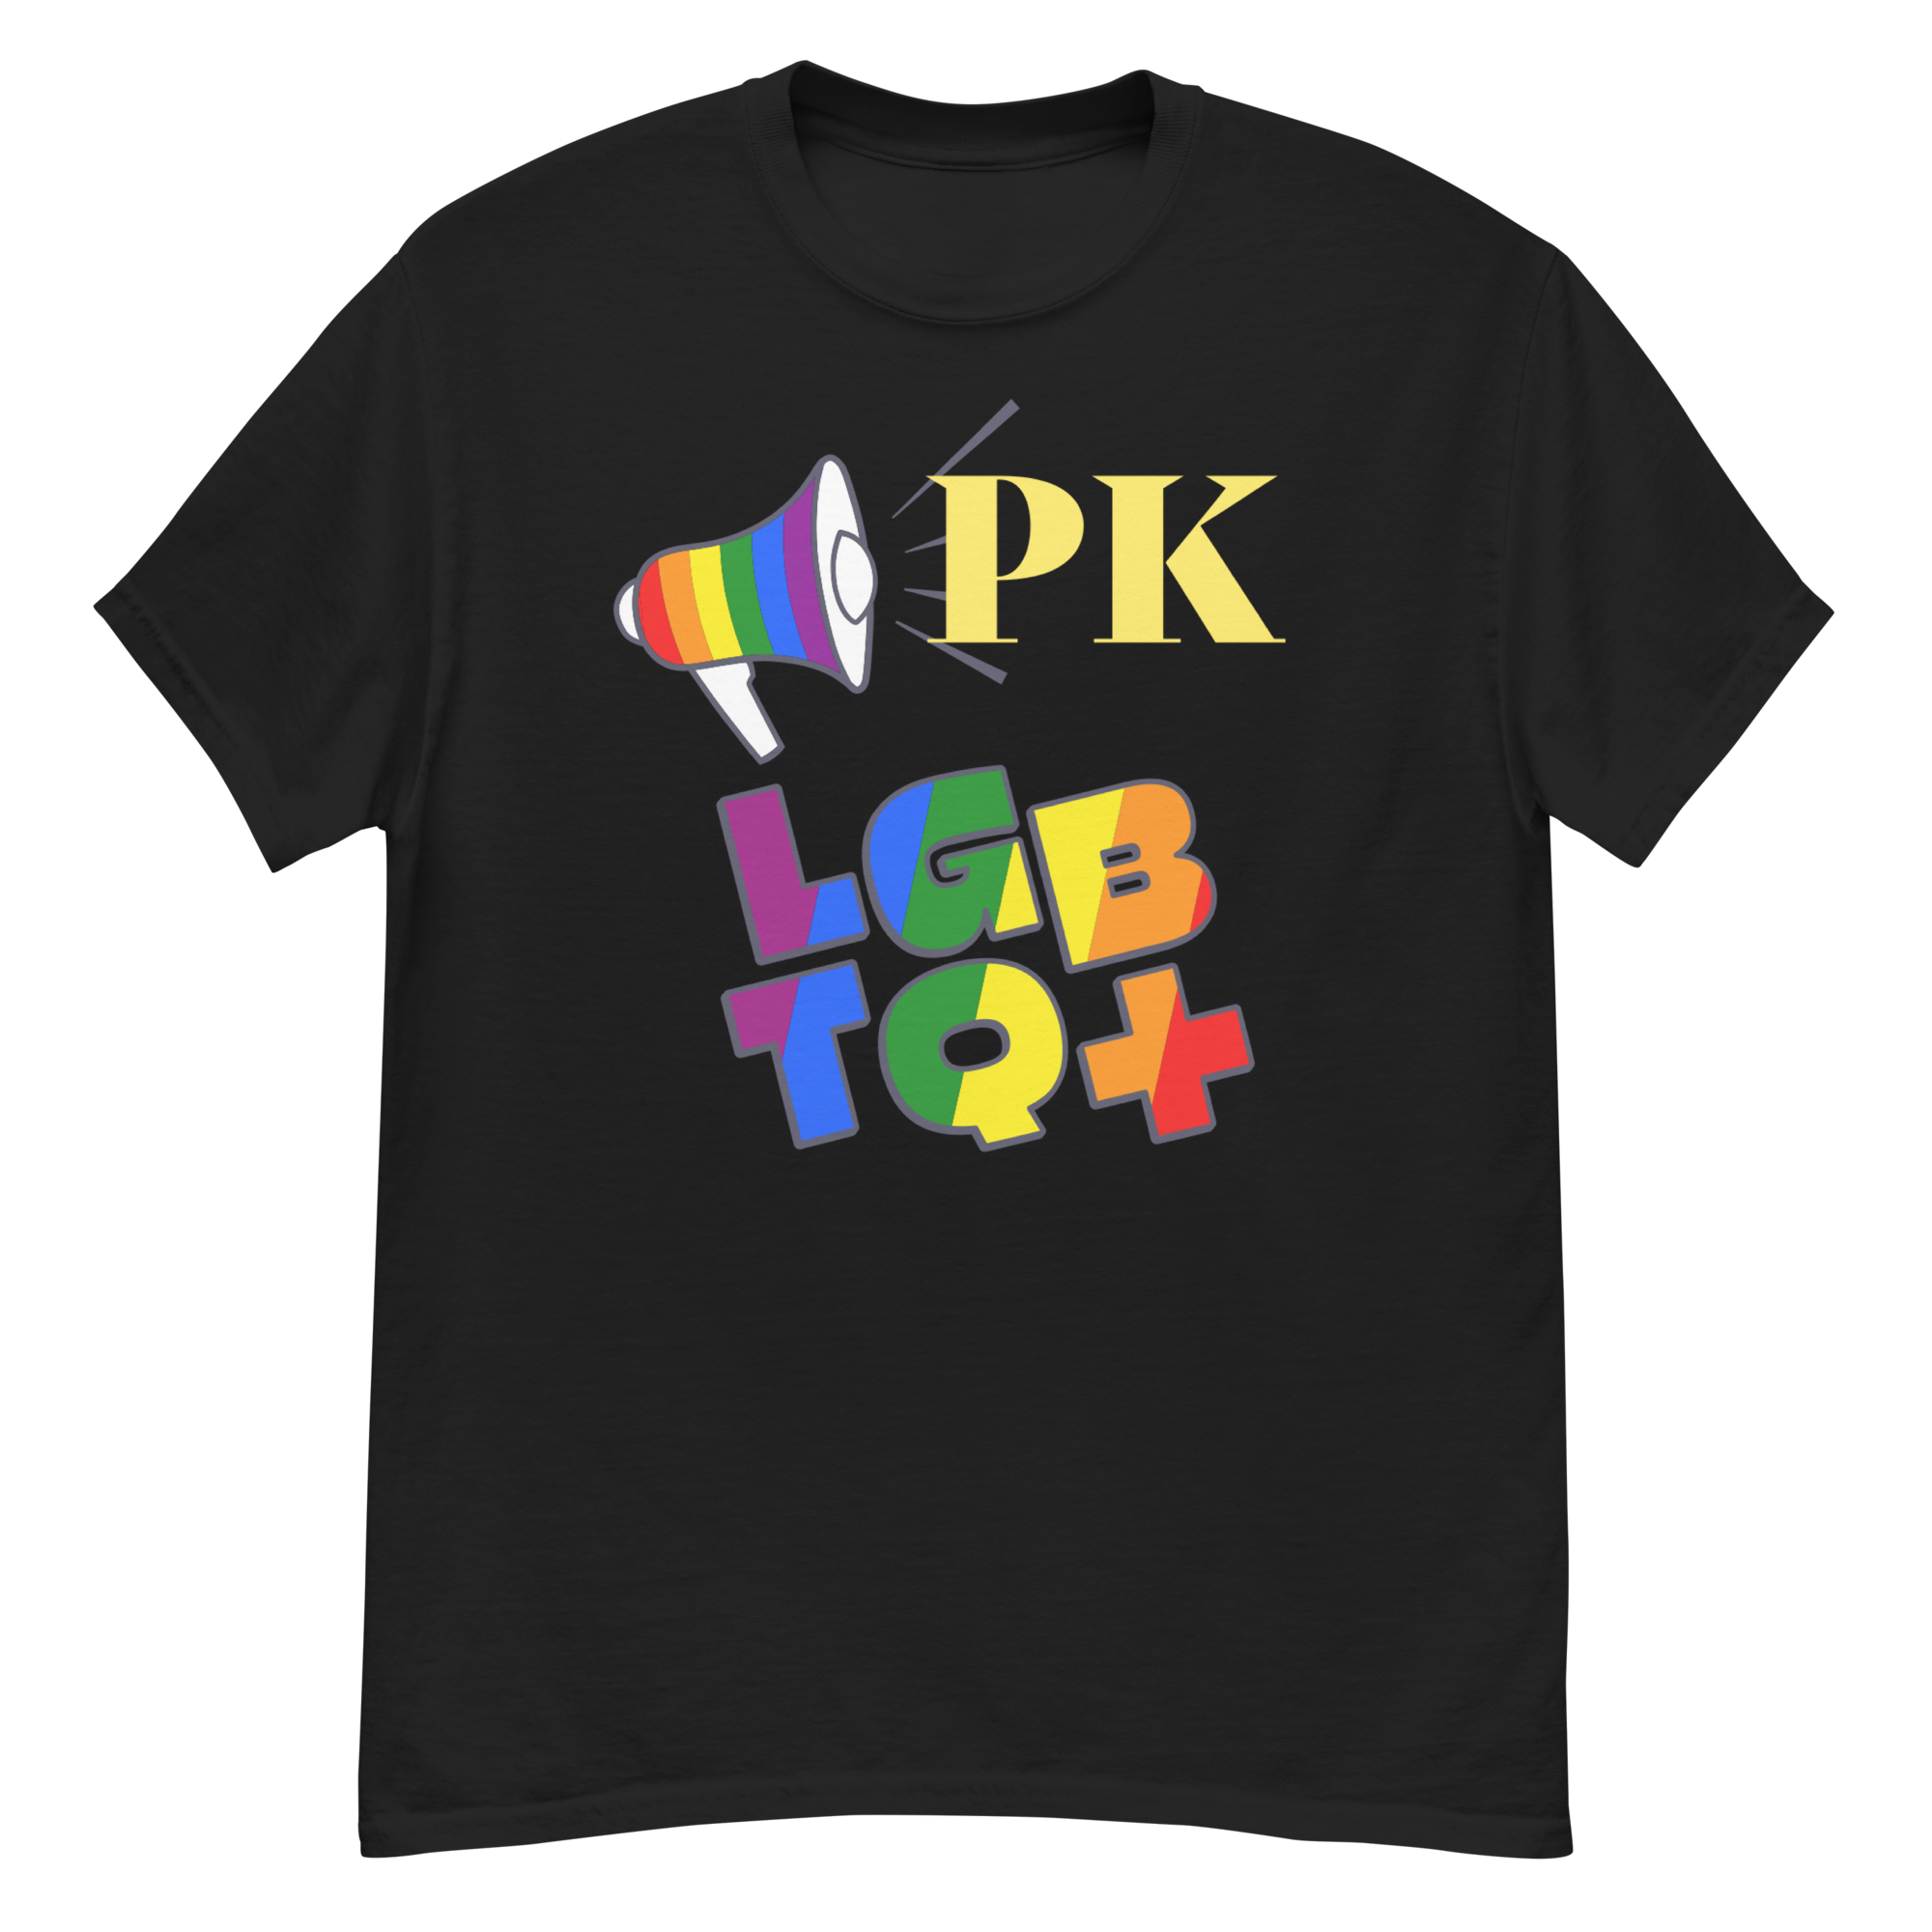 PK LGBTQ+